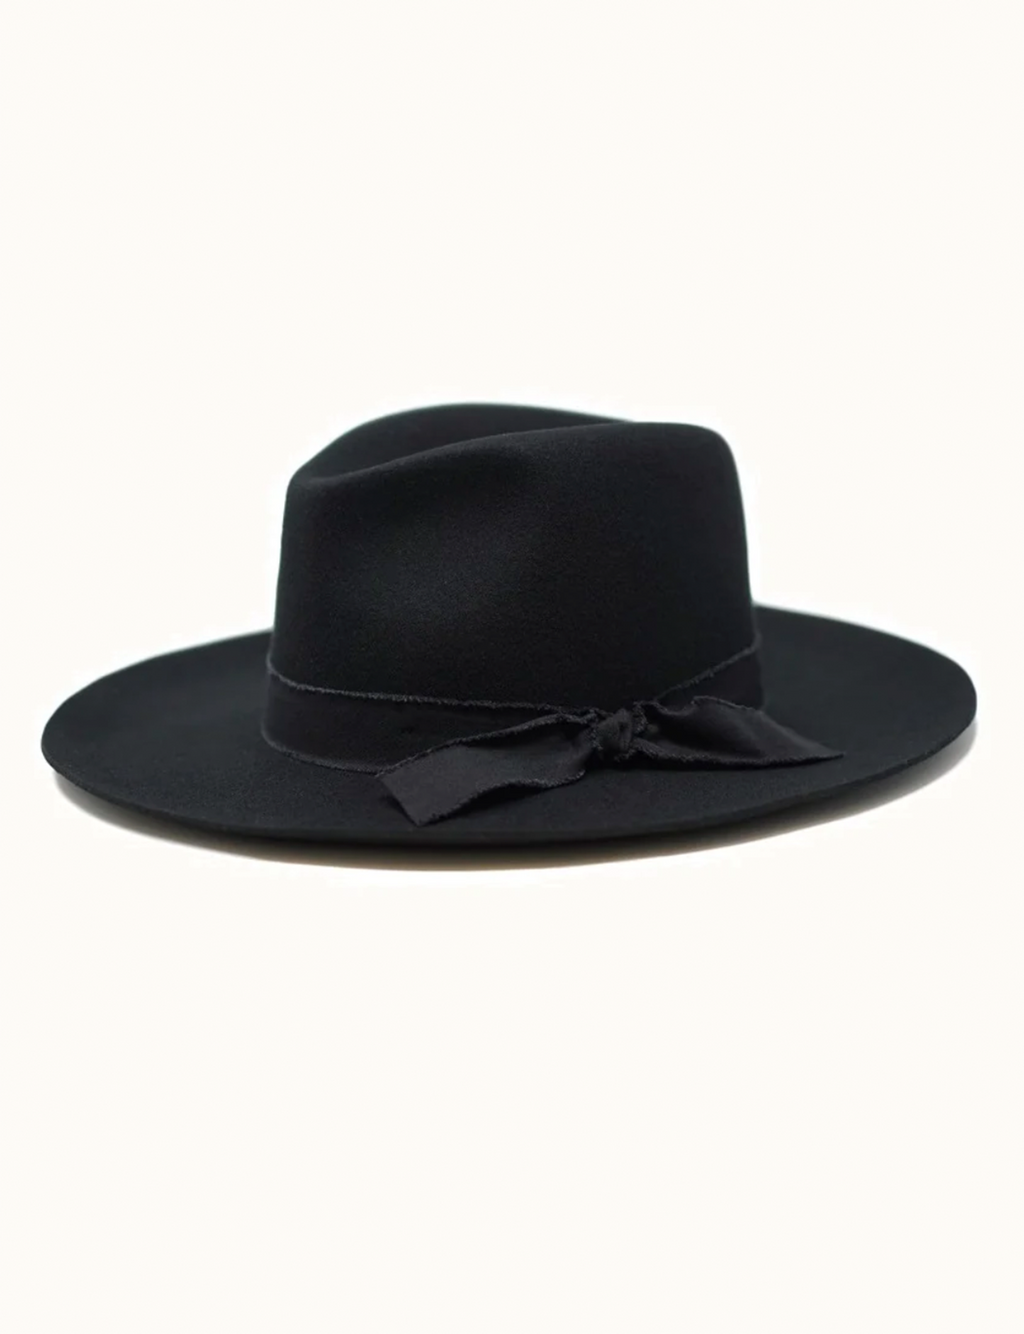 Wool Felt Panama Hat w/ Raw Band, Black